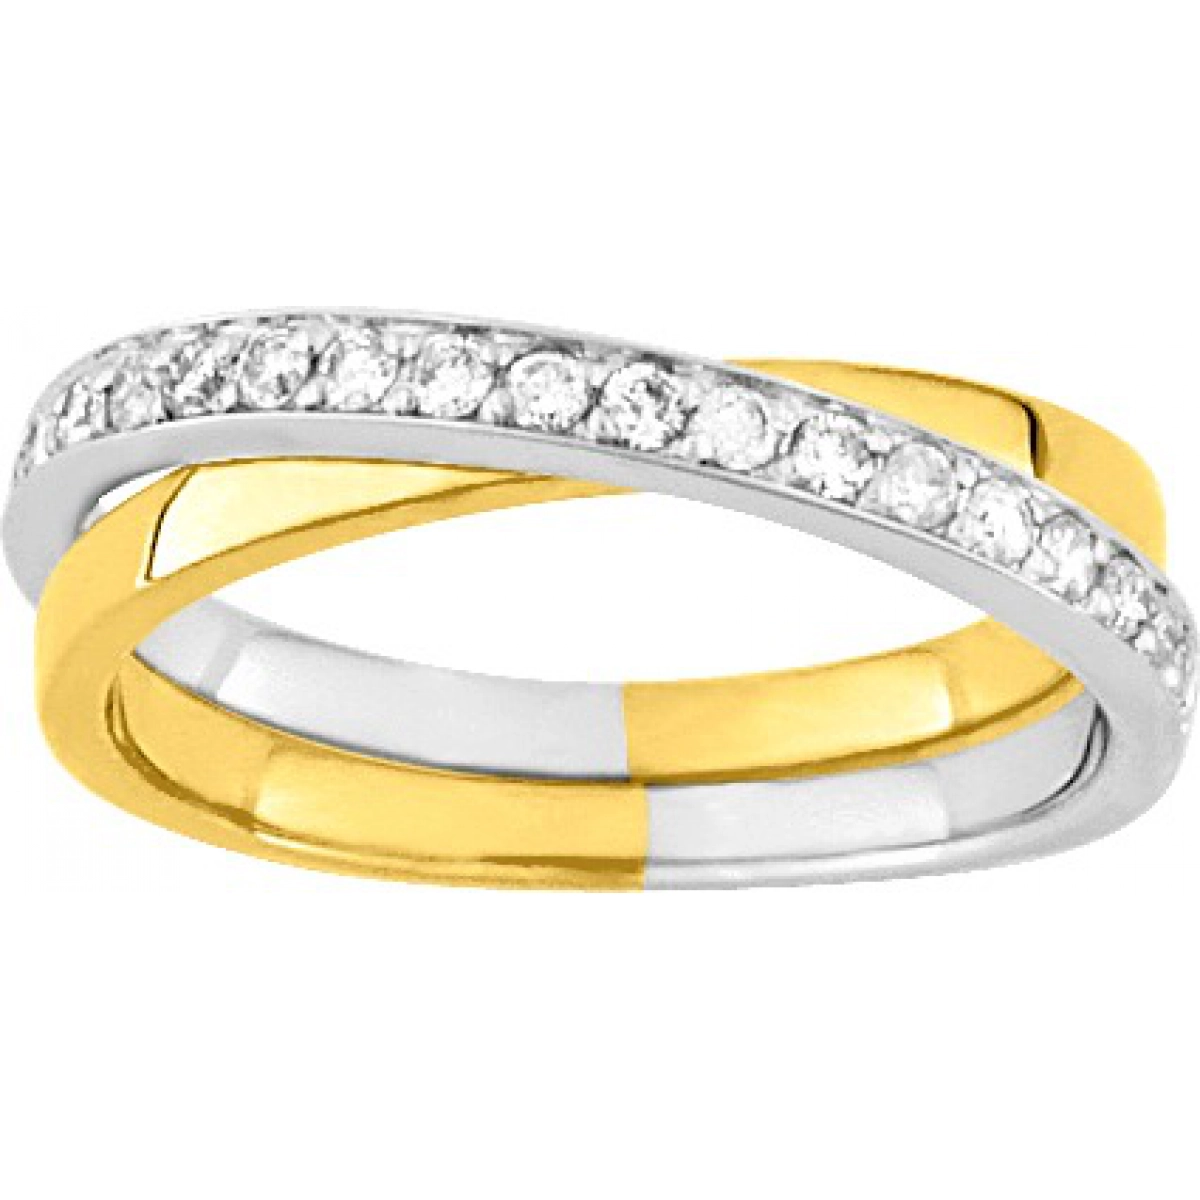 Wedding ring w. 19 diam 0.27ct 18K 2TG - Size: 56  Lua Blanca  3R001XB4.16